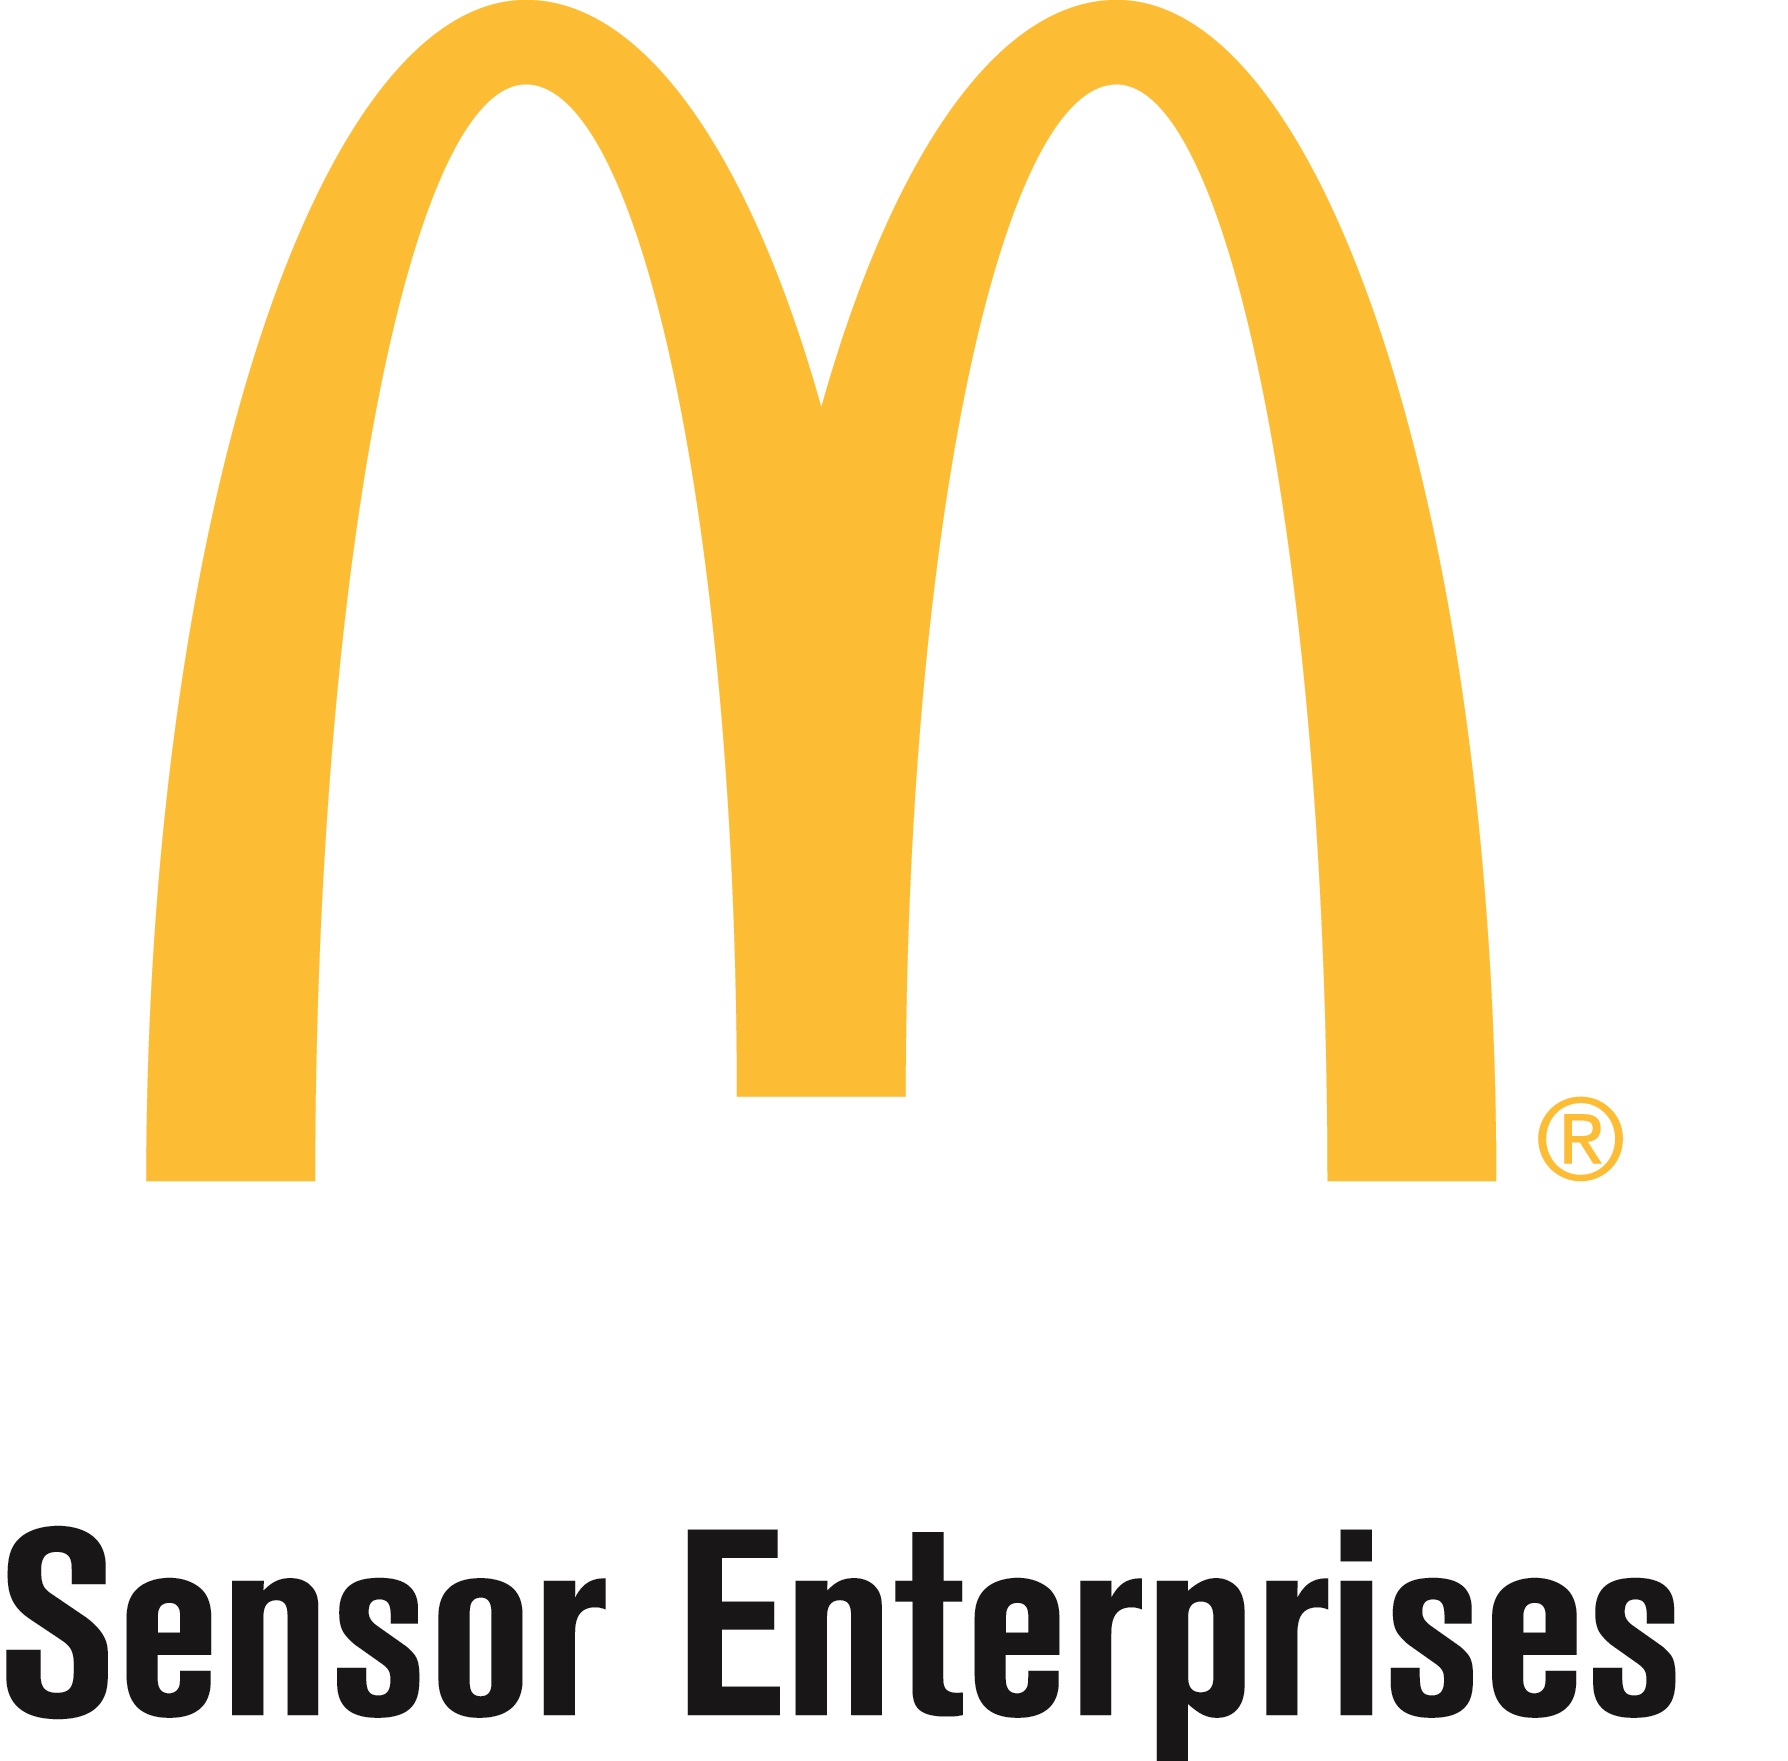 Sensor Enterprises logo